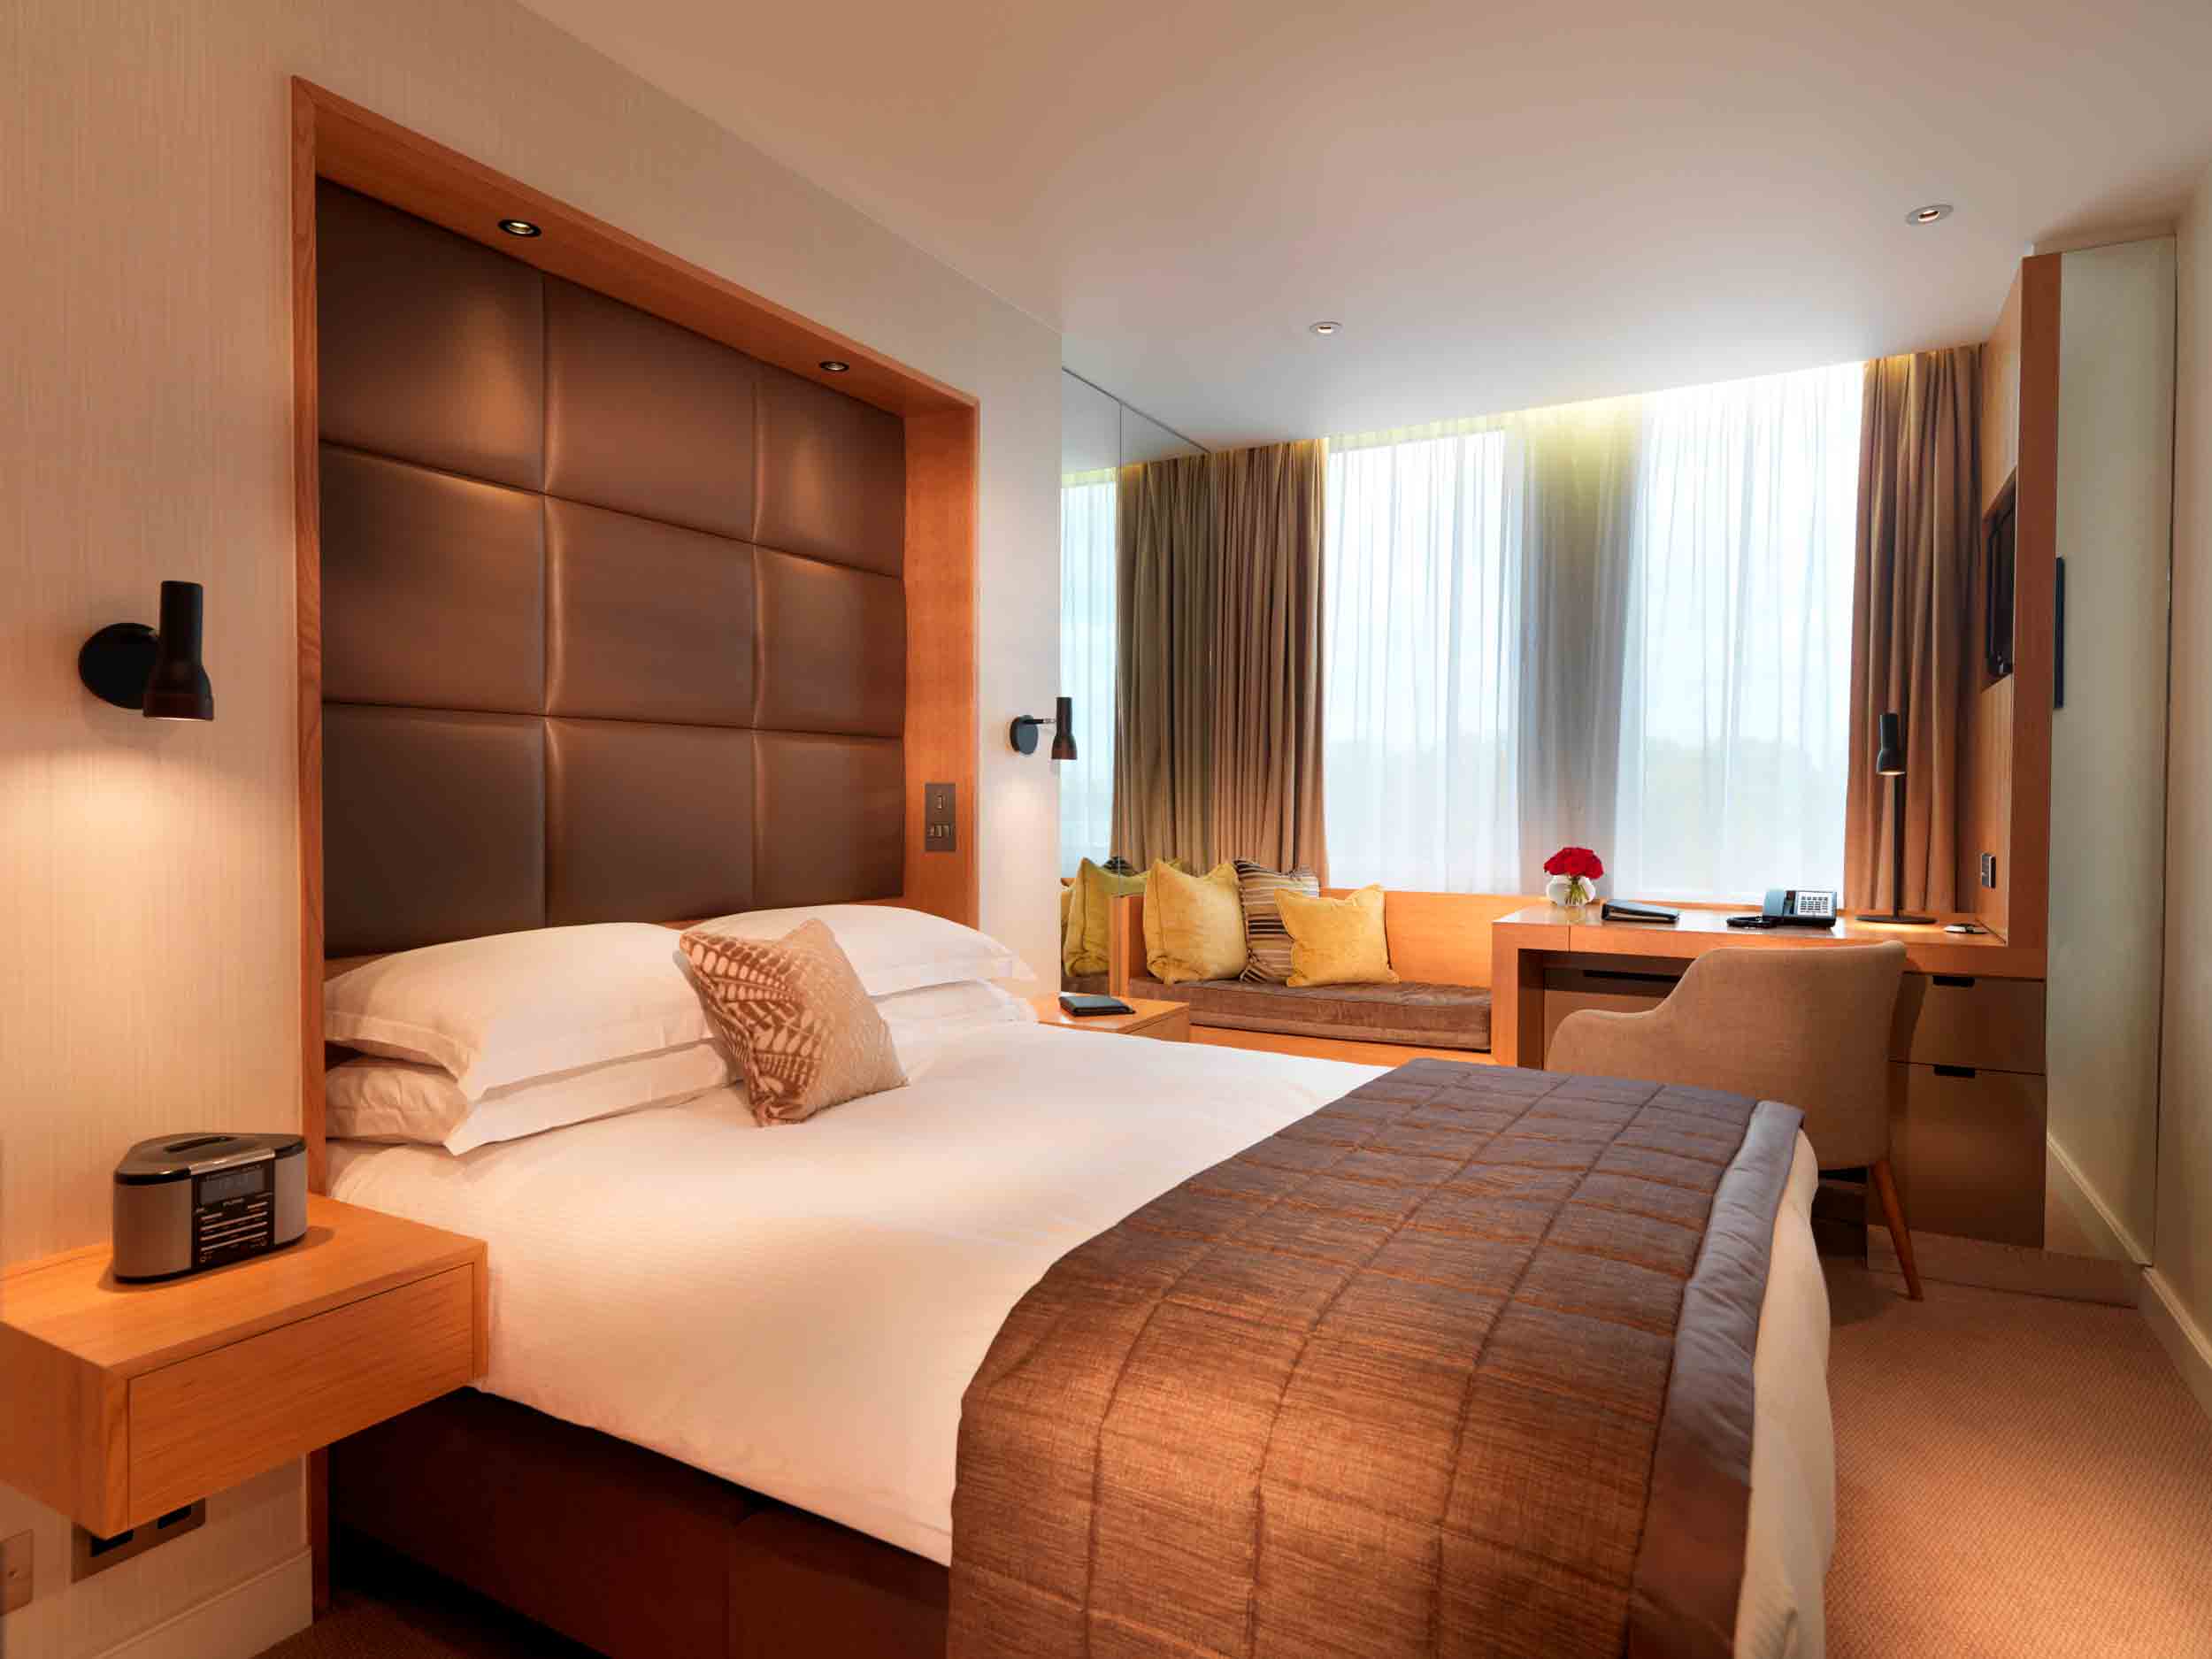 bedroom 3 - hotel royal garden - london, united kingdom